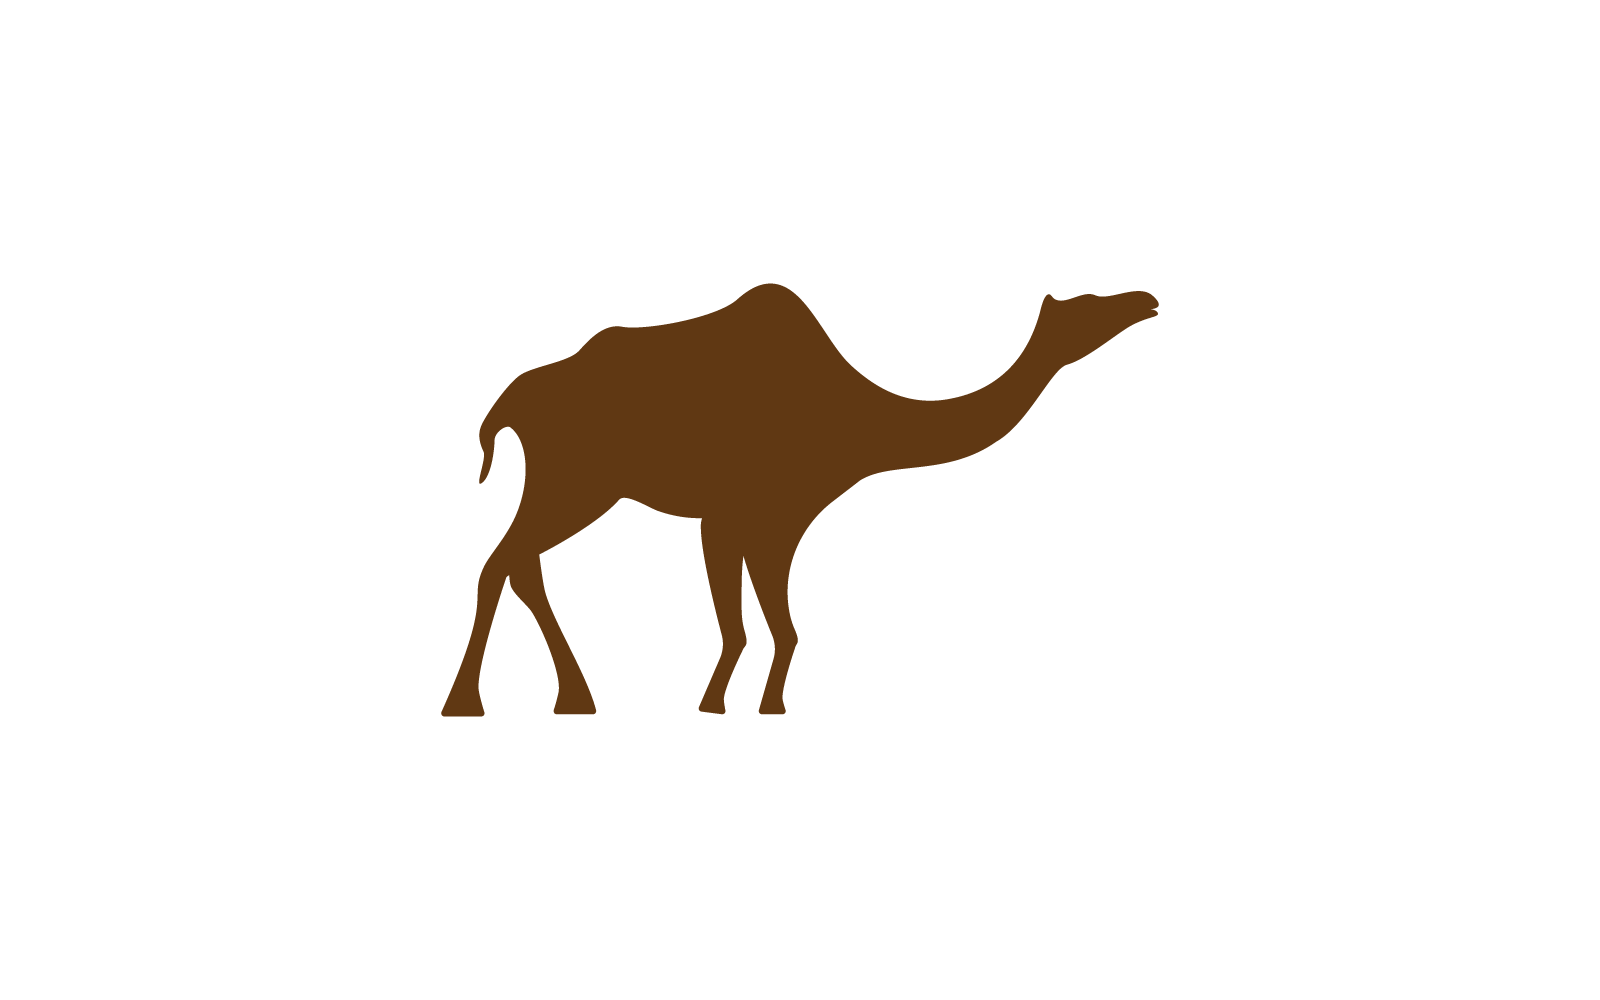 Camel logo flat design vector template